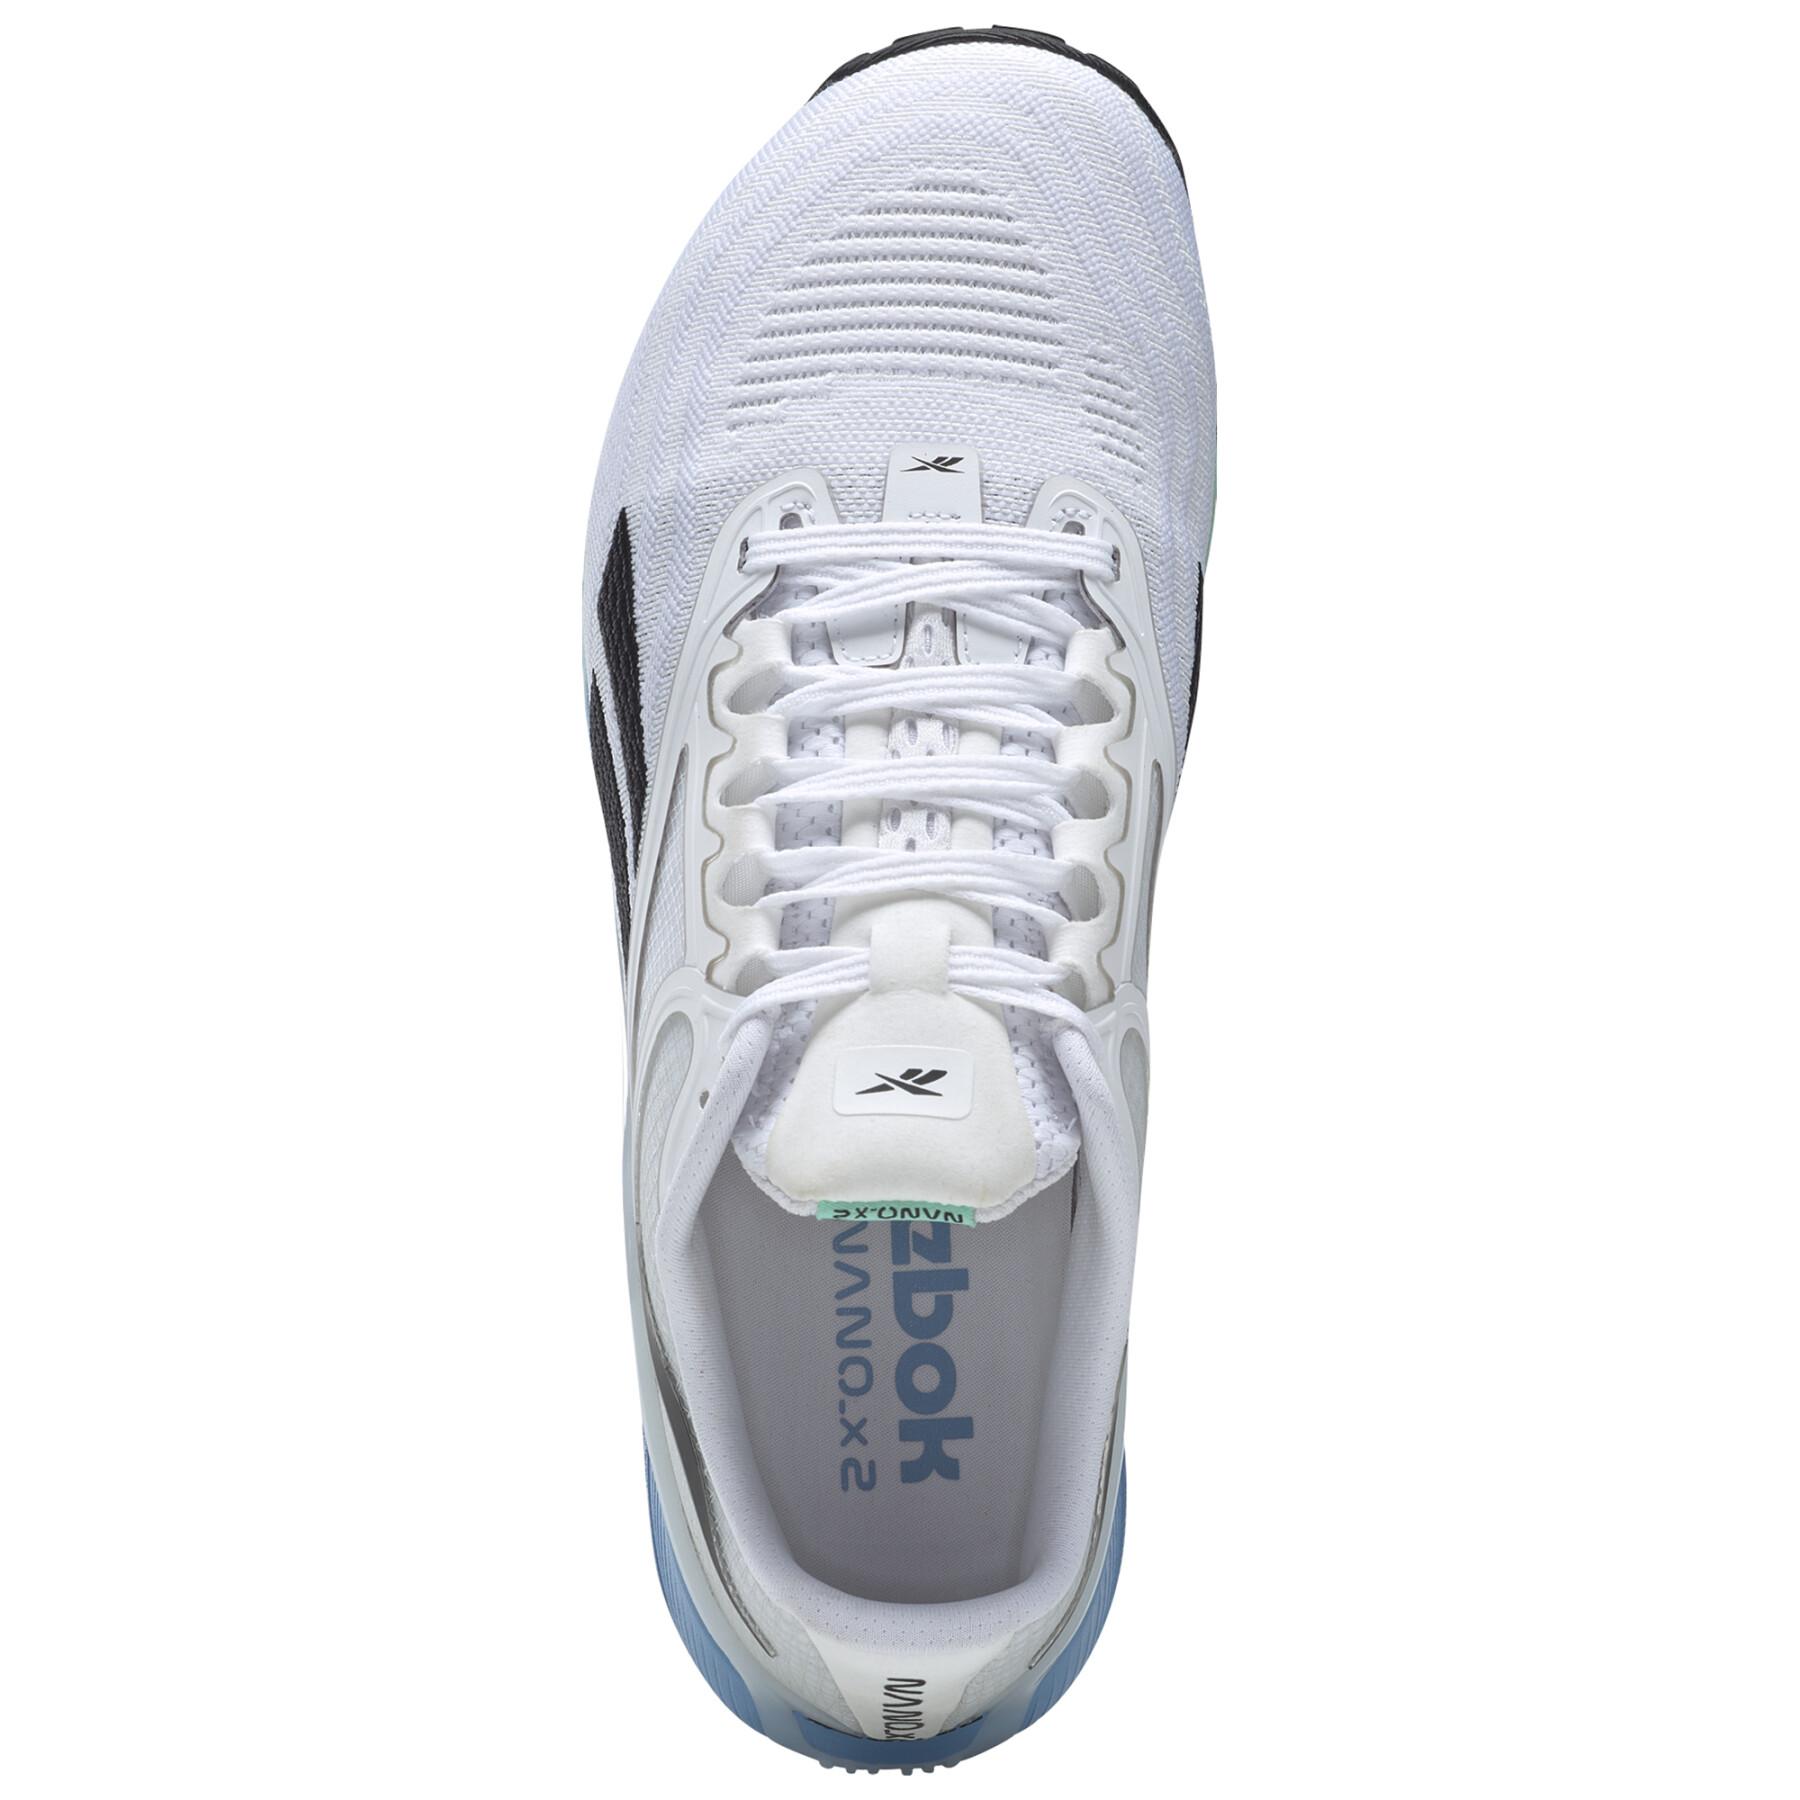 Sapatos Reebok Nano X2